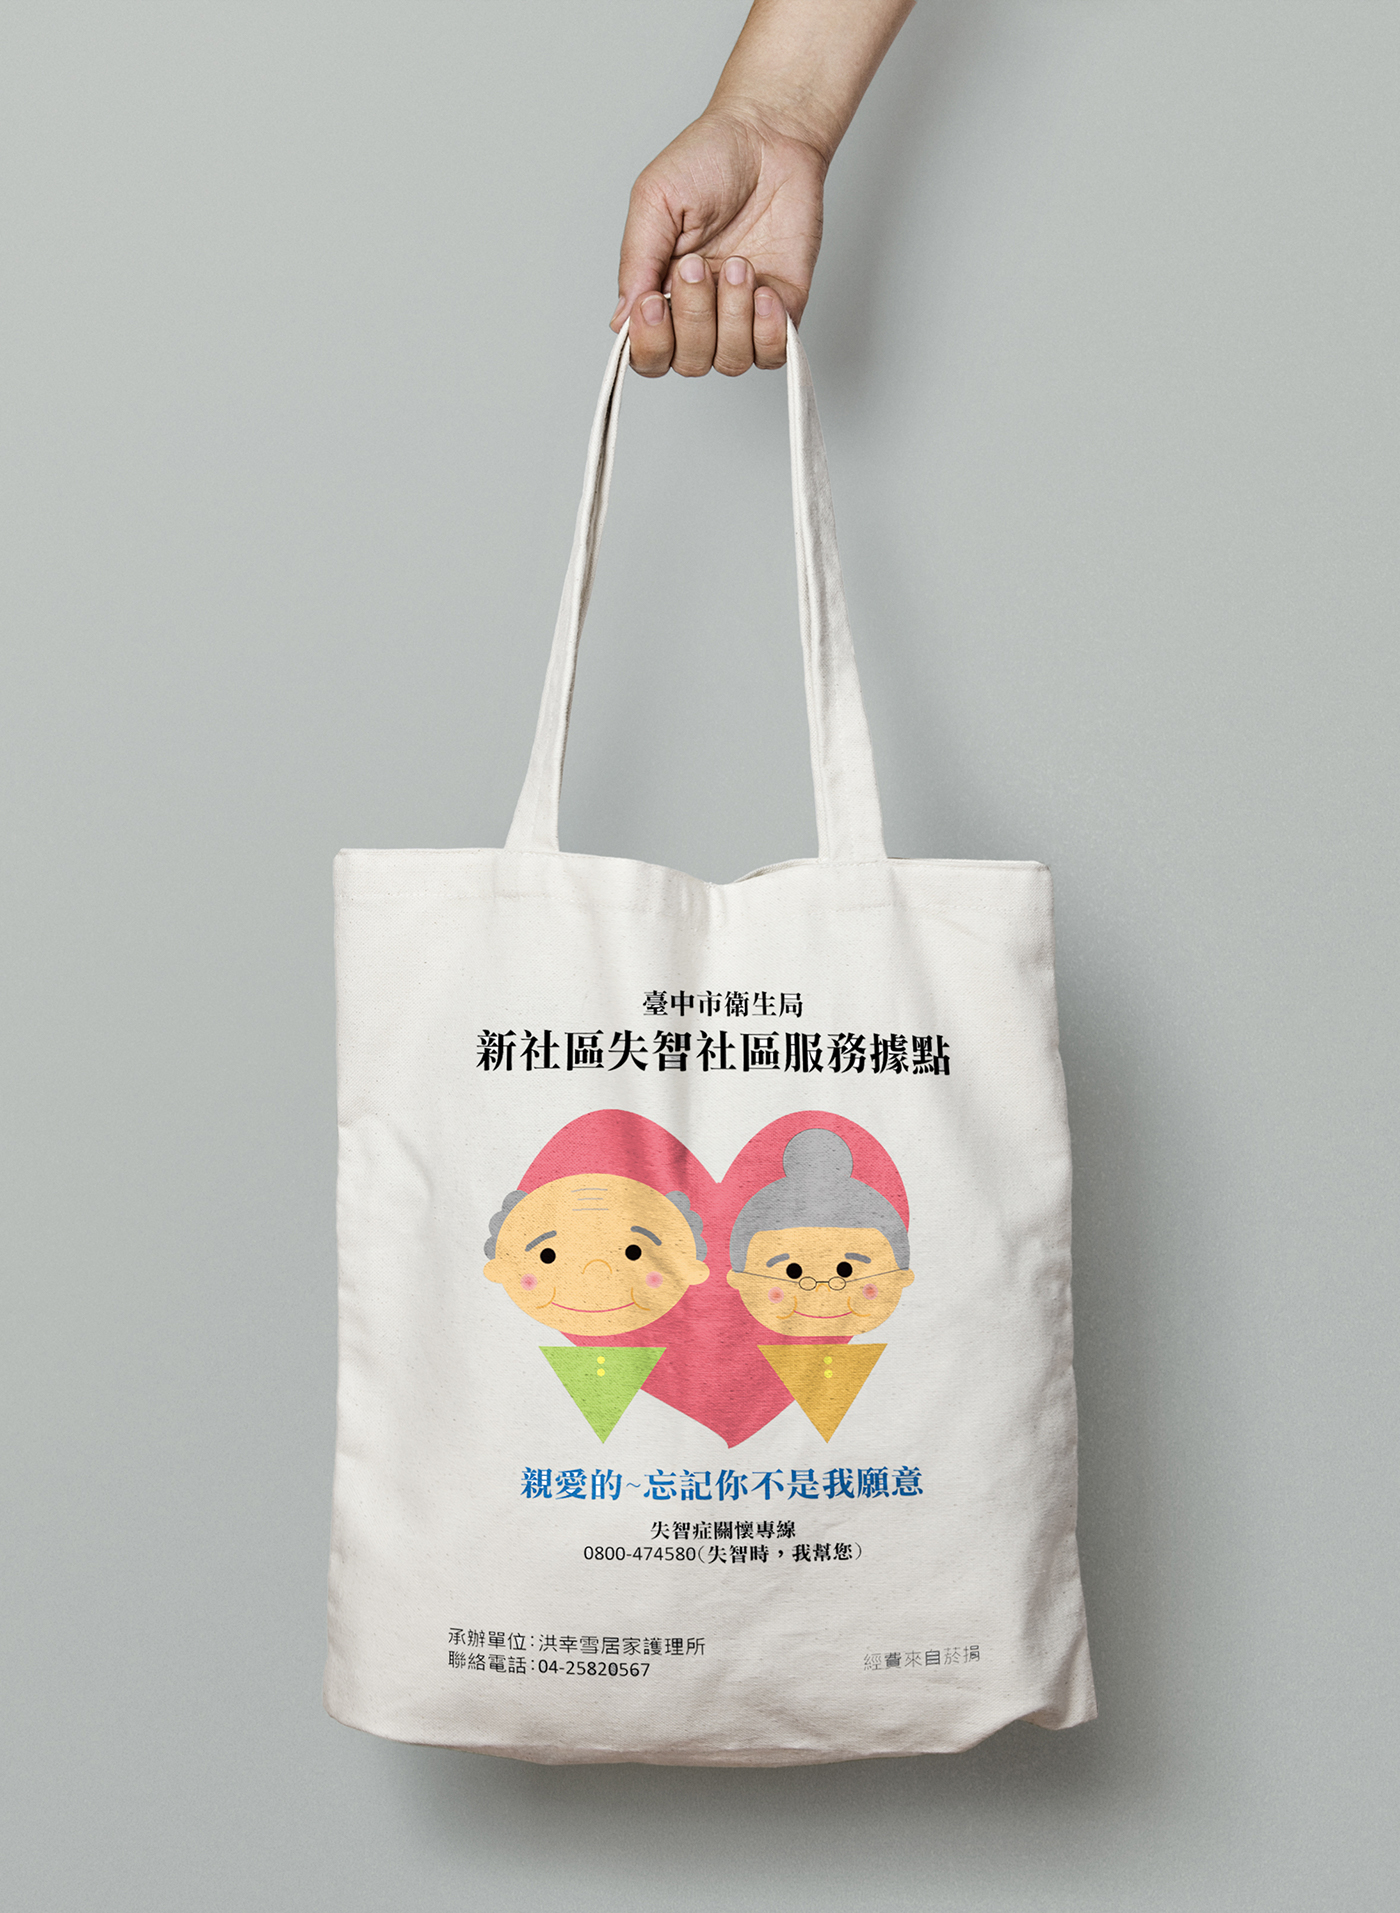 Canvas Tote Bag Charitable Design design2017 bag design charitable for elderly